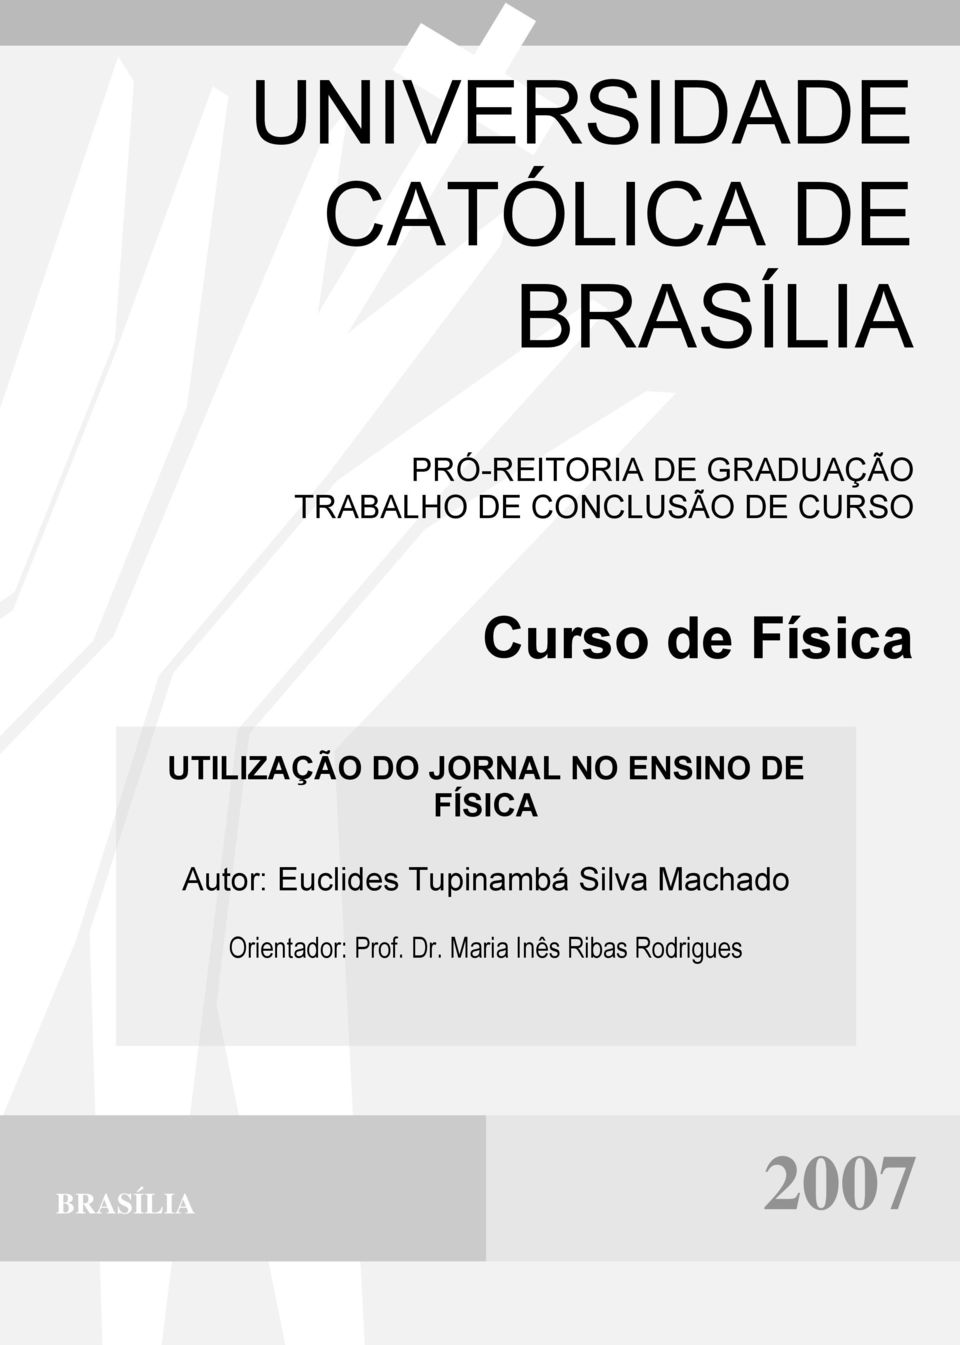 JORNAL NO ENSINO DE FÍSICA Autor: Euclides Tupinambá Silva